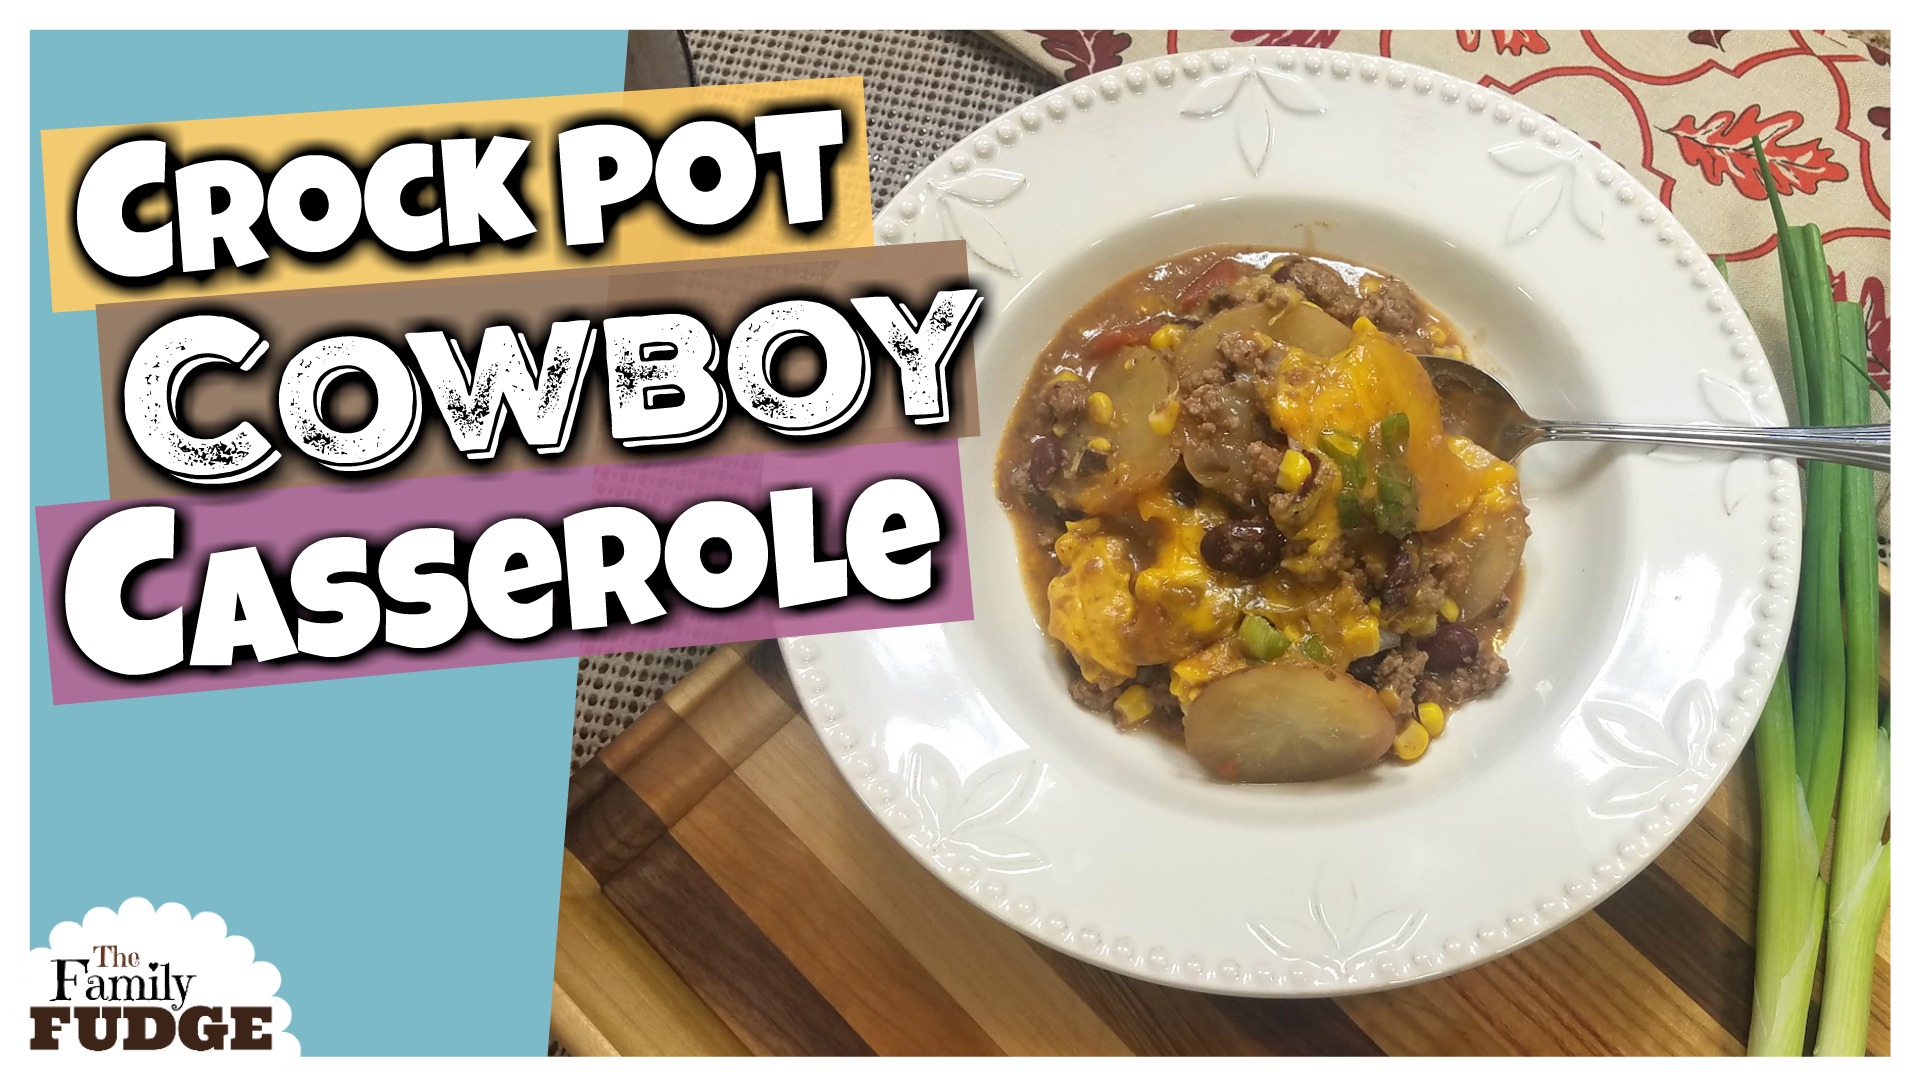 Crock Pot Cowboy Casserole